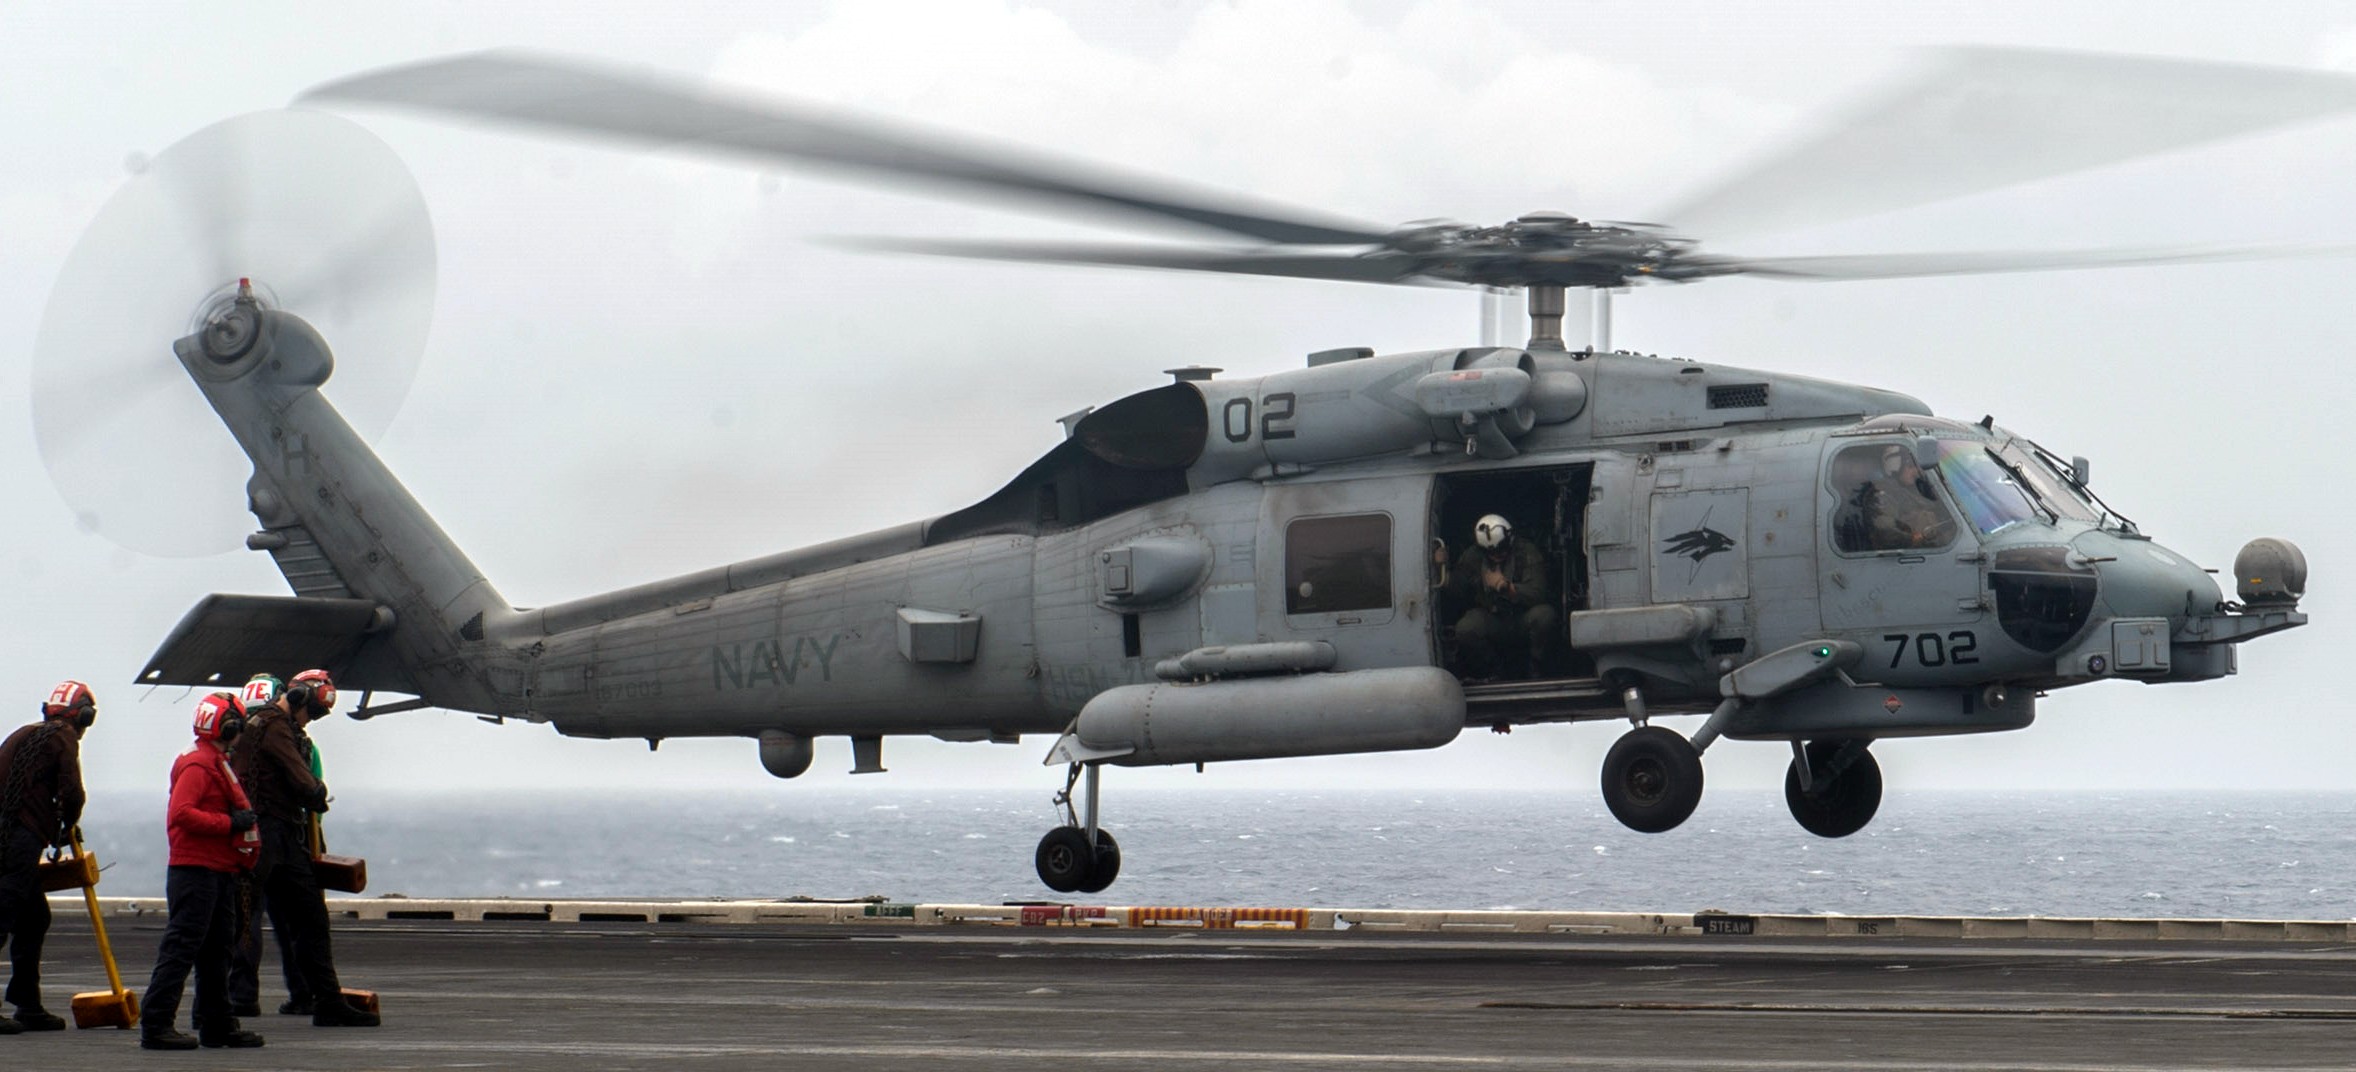 hsm-75 wolf pack helicopter maritime strike squadron mh-60r seahawk cvw-11 cvn-68 uss nimitz 08